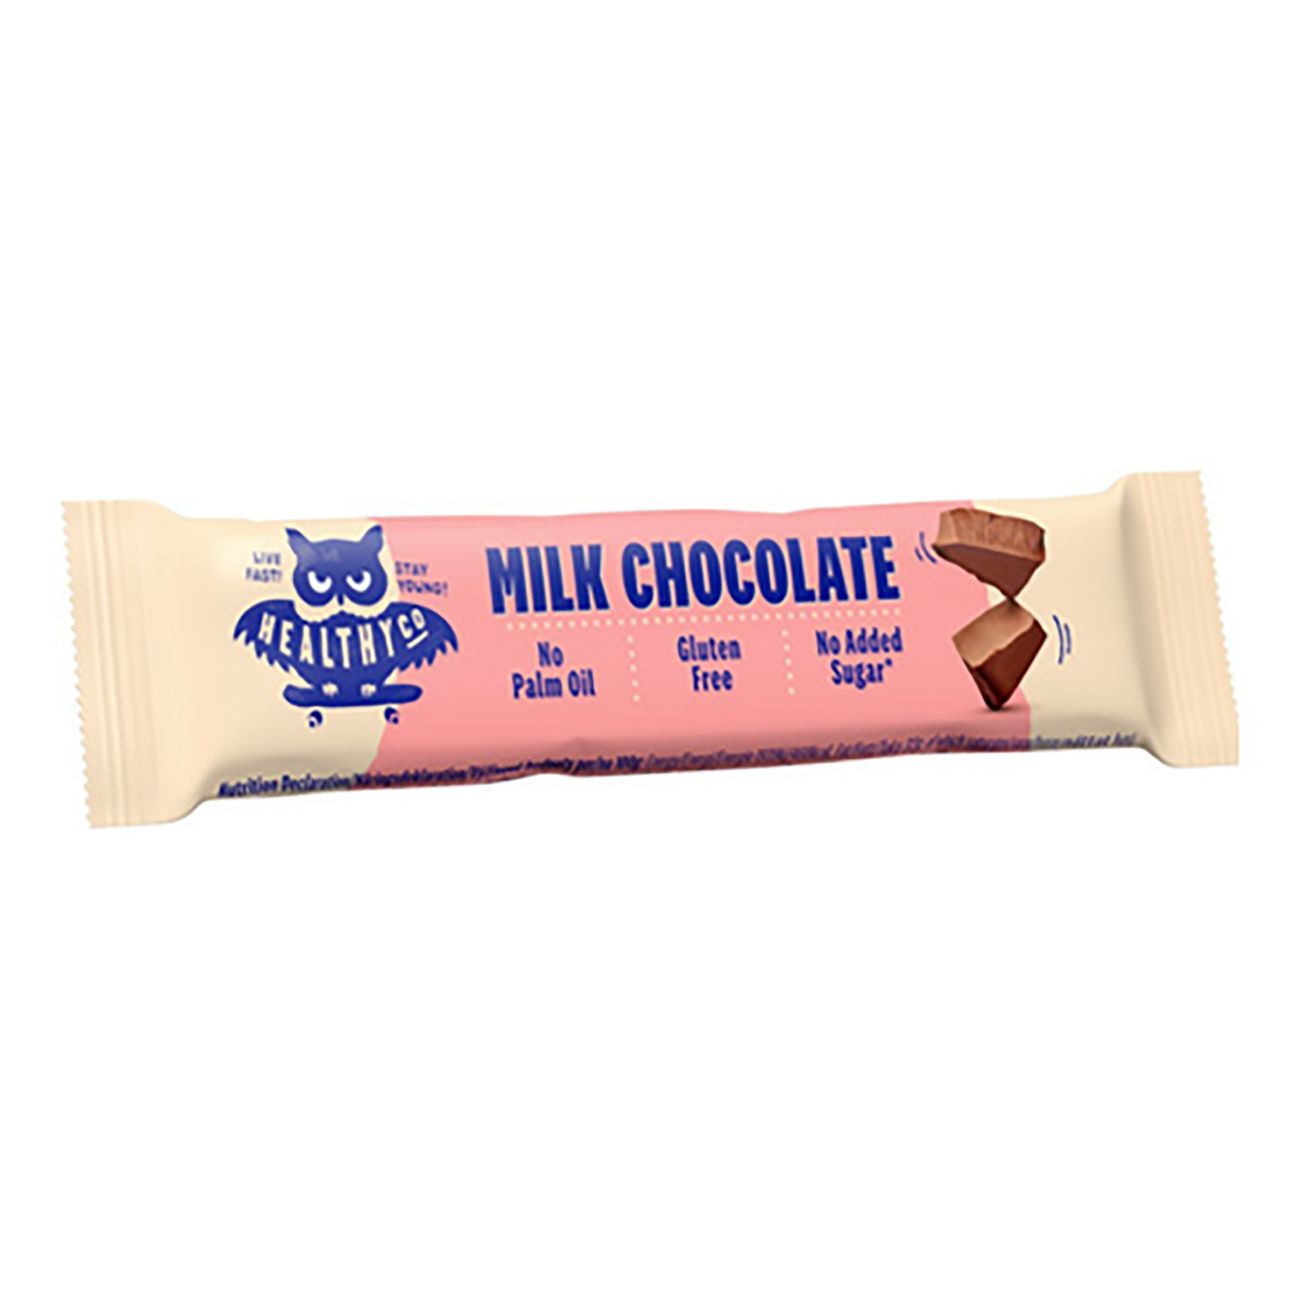 healthyco-milk-chocolate-bars-92640-1